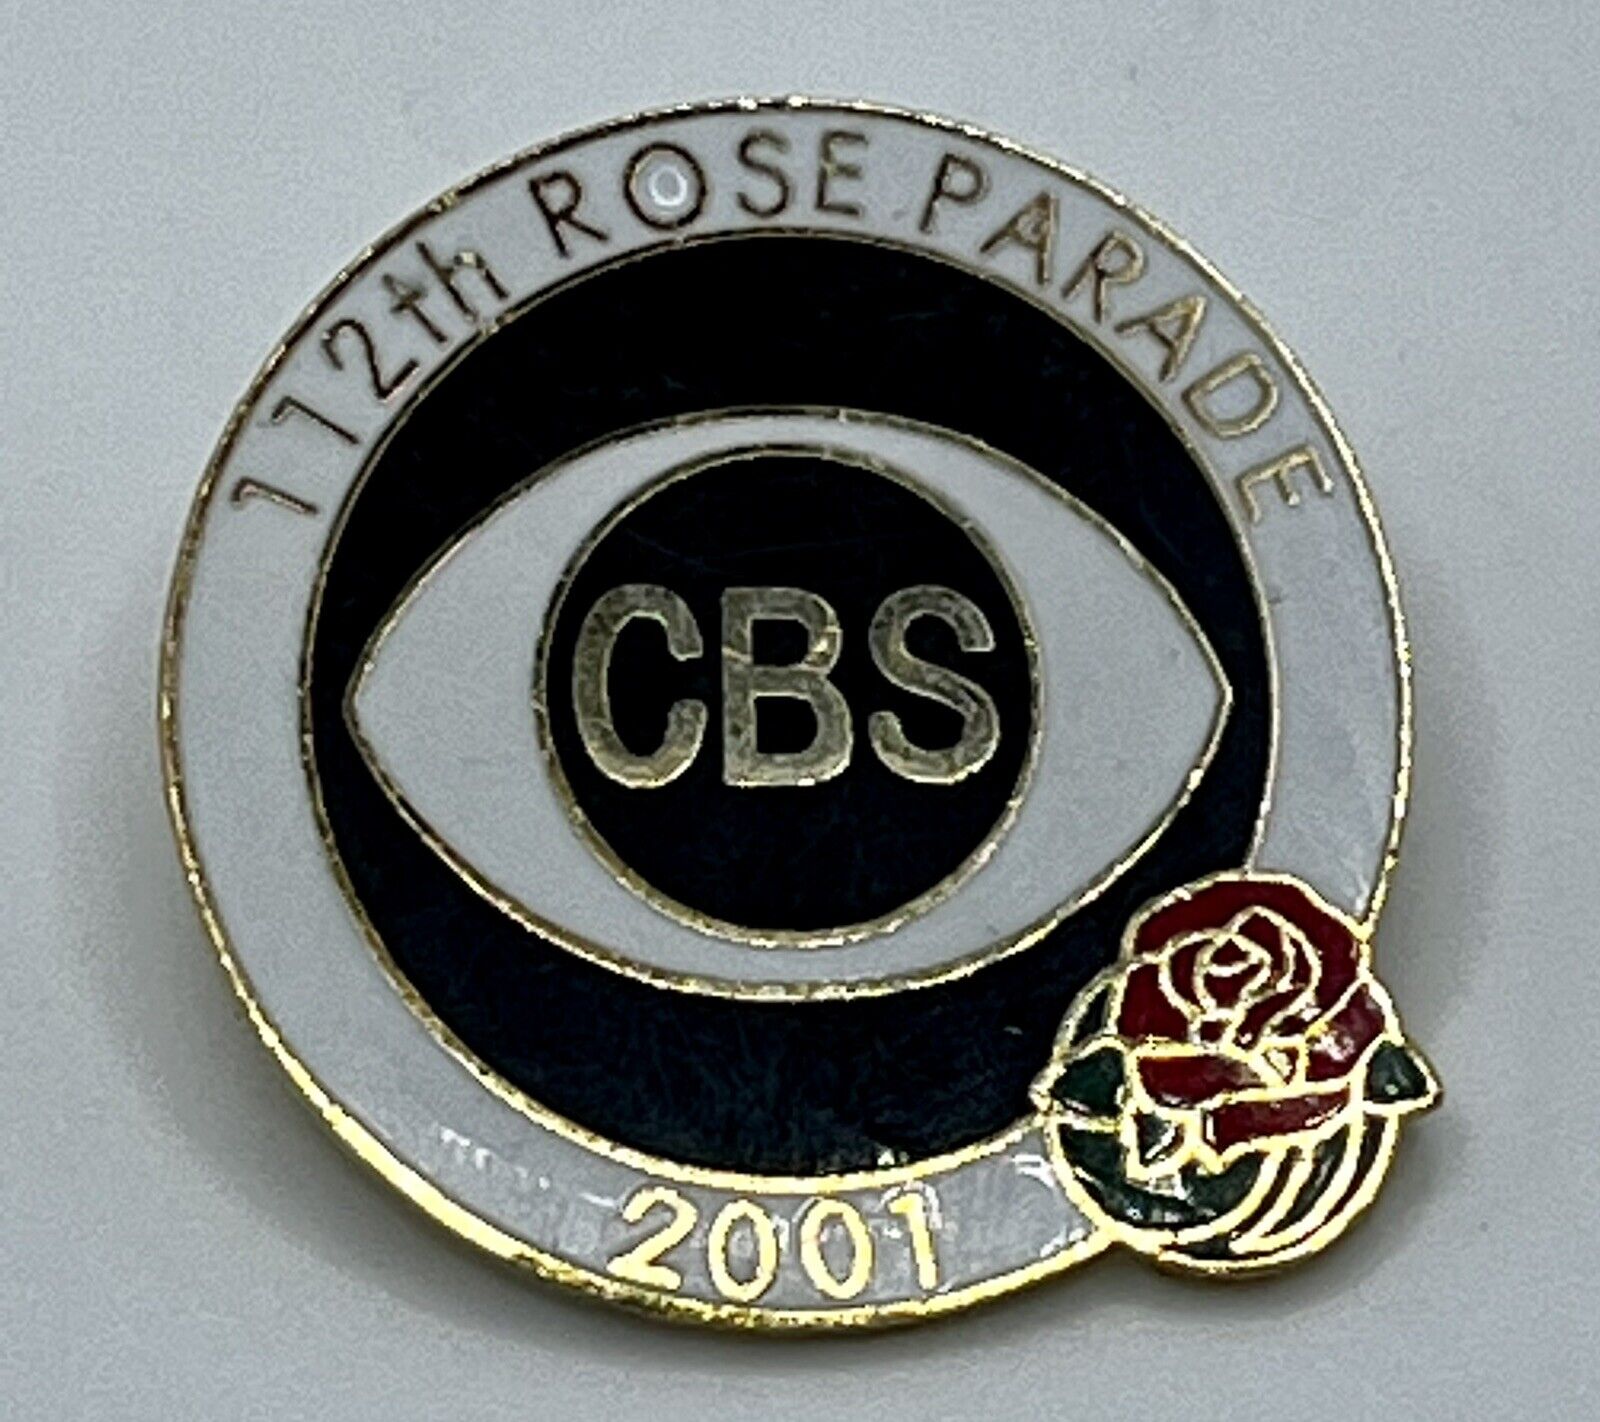 Rose Parade 2001 CBS Lapel Pin 112th ROSE PARADE Pin Gold Tone & Enamel